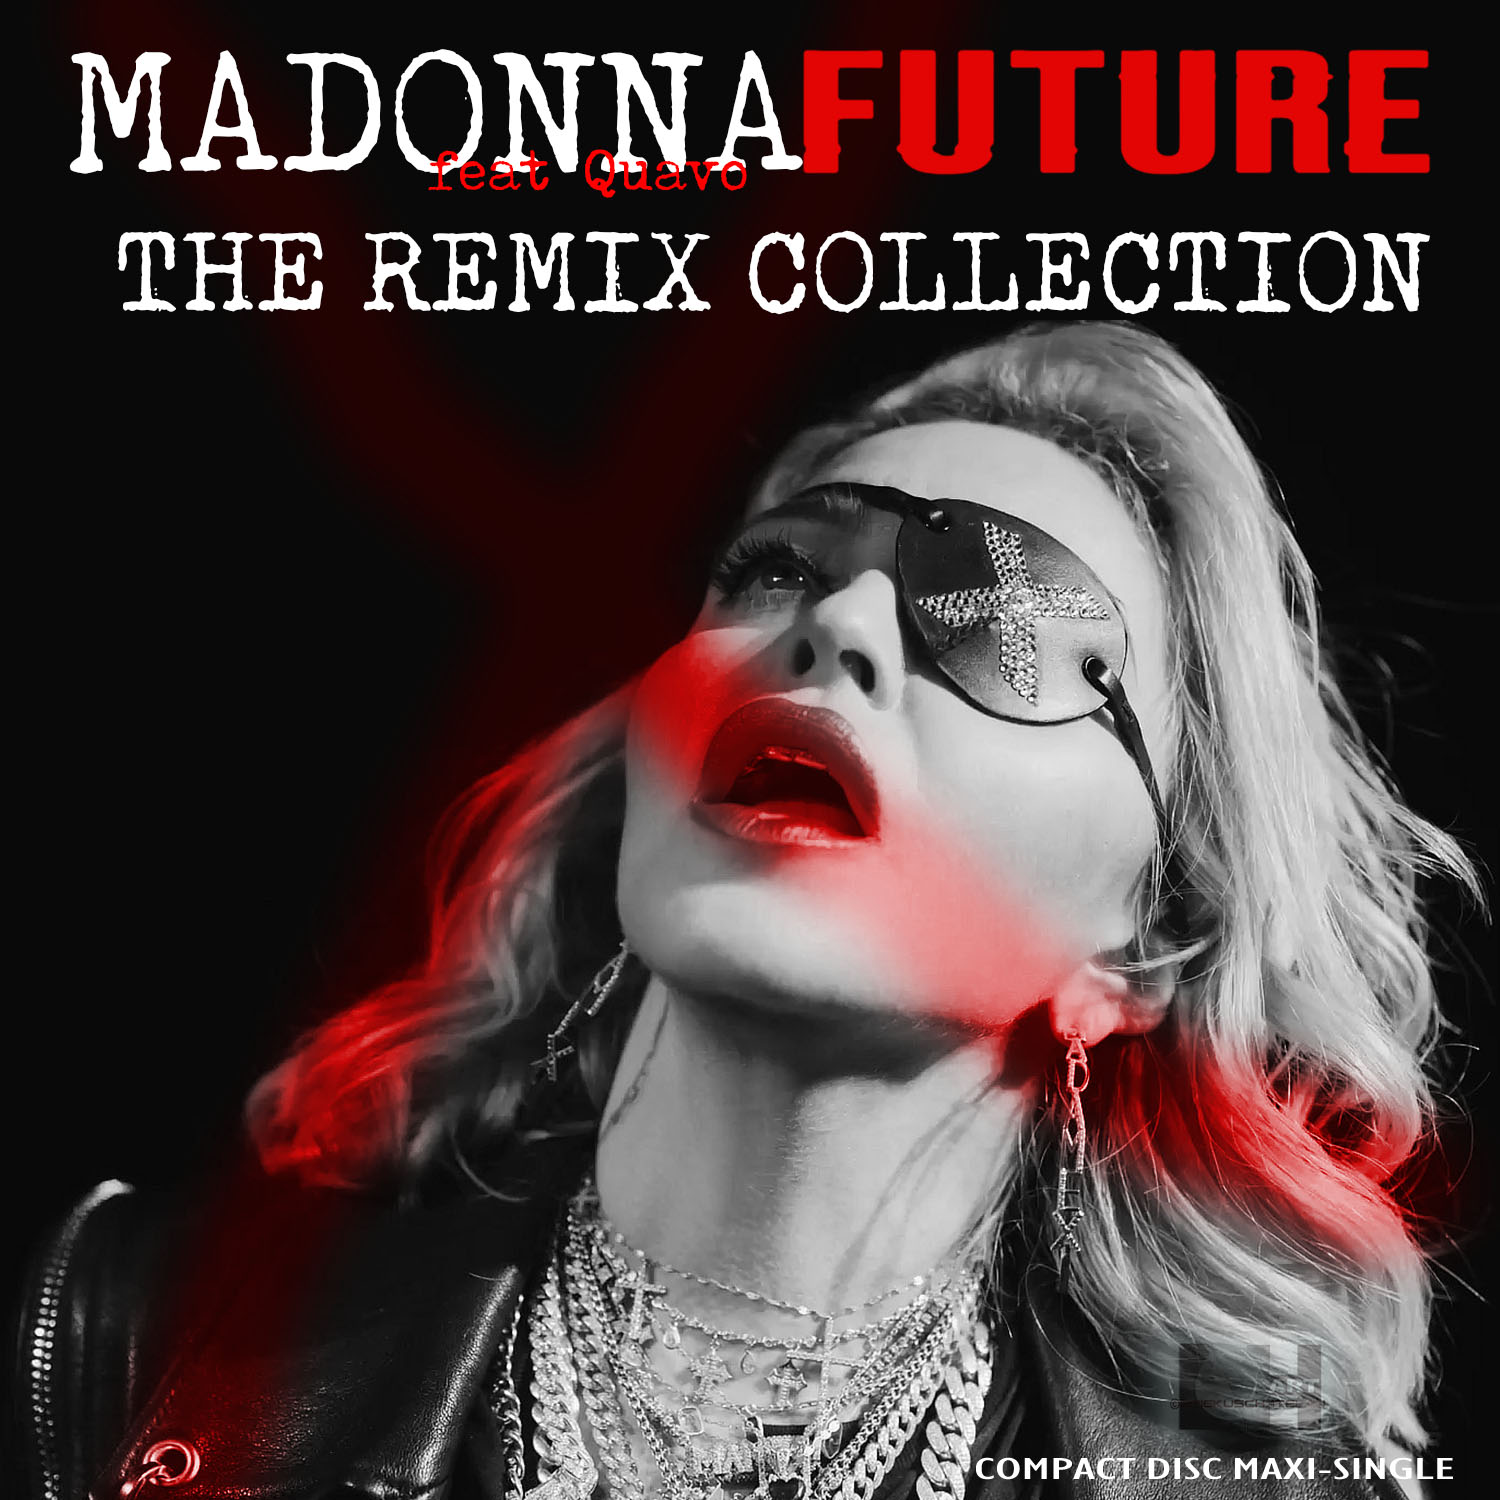 Remix collection. Безумная Мадонна. Madonna "Madame x". Коллекция Remix. Madonna Future lovers.